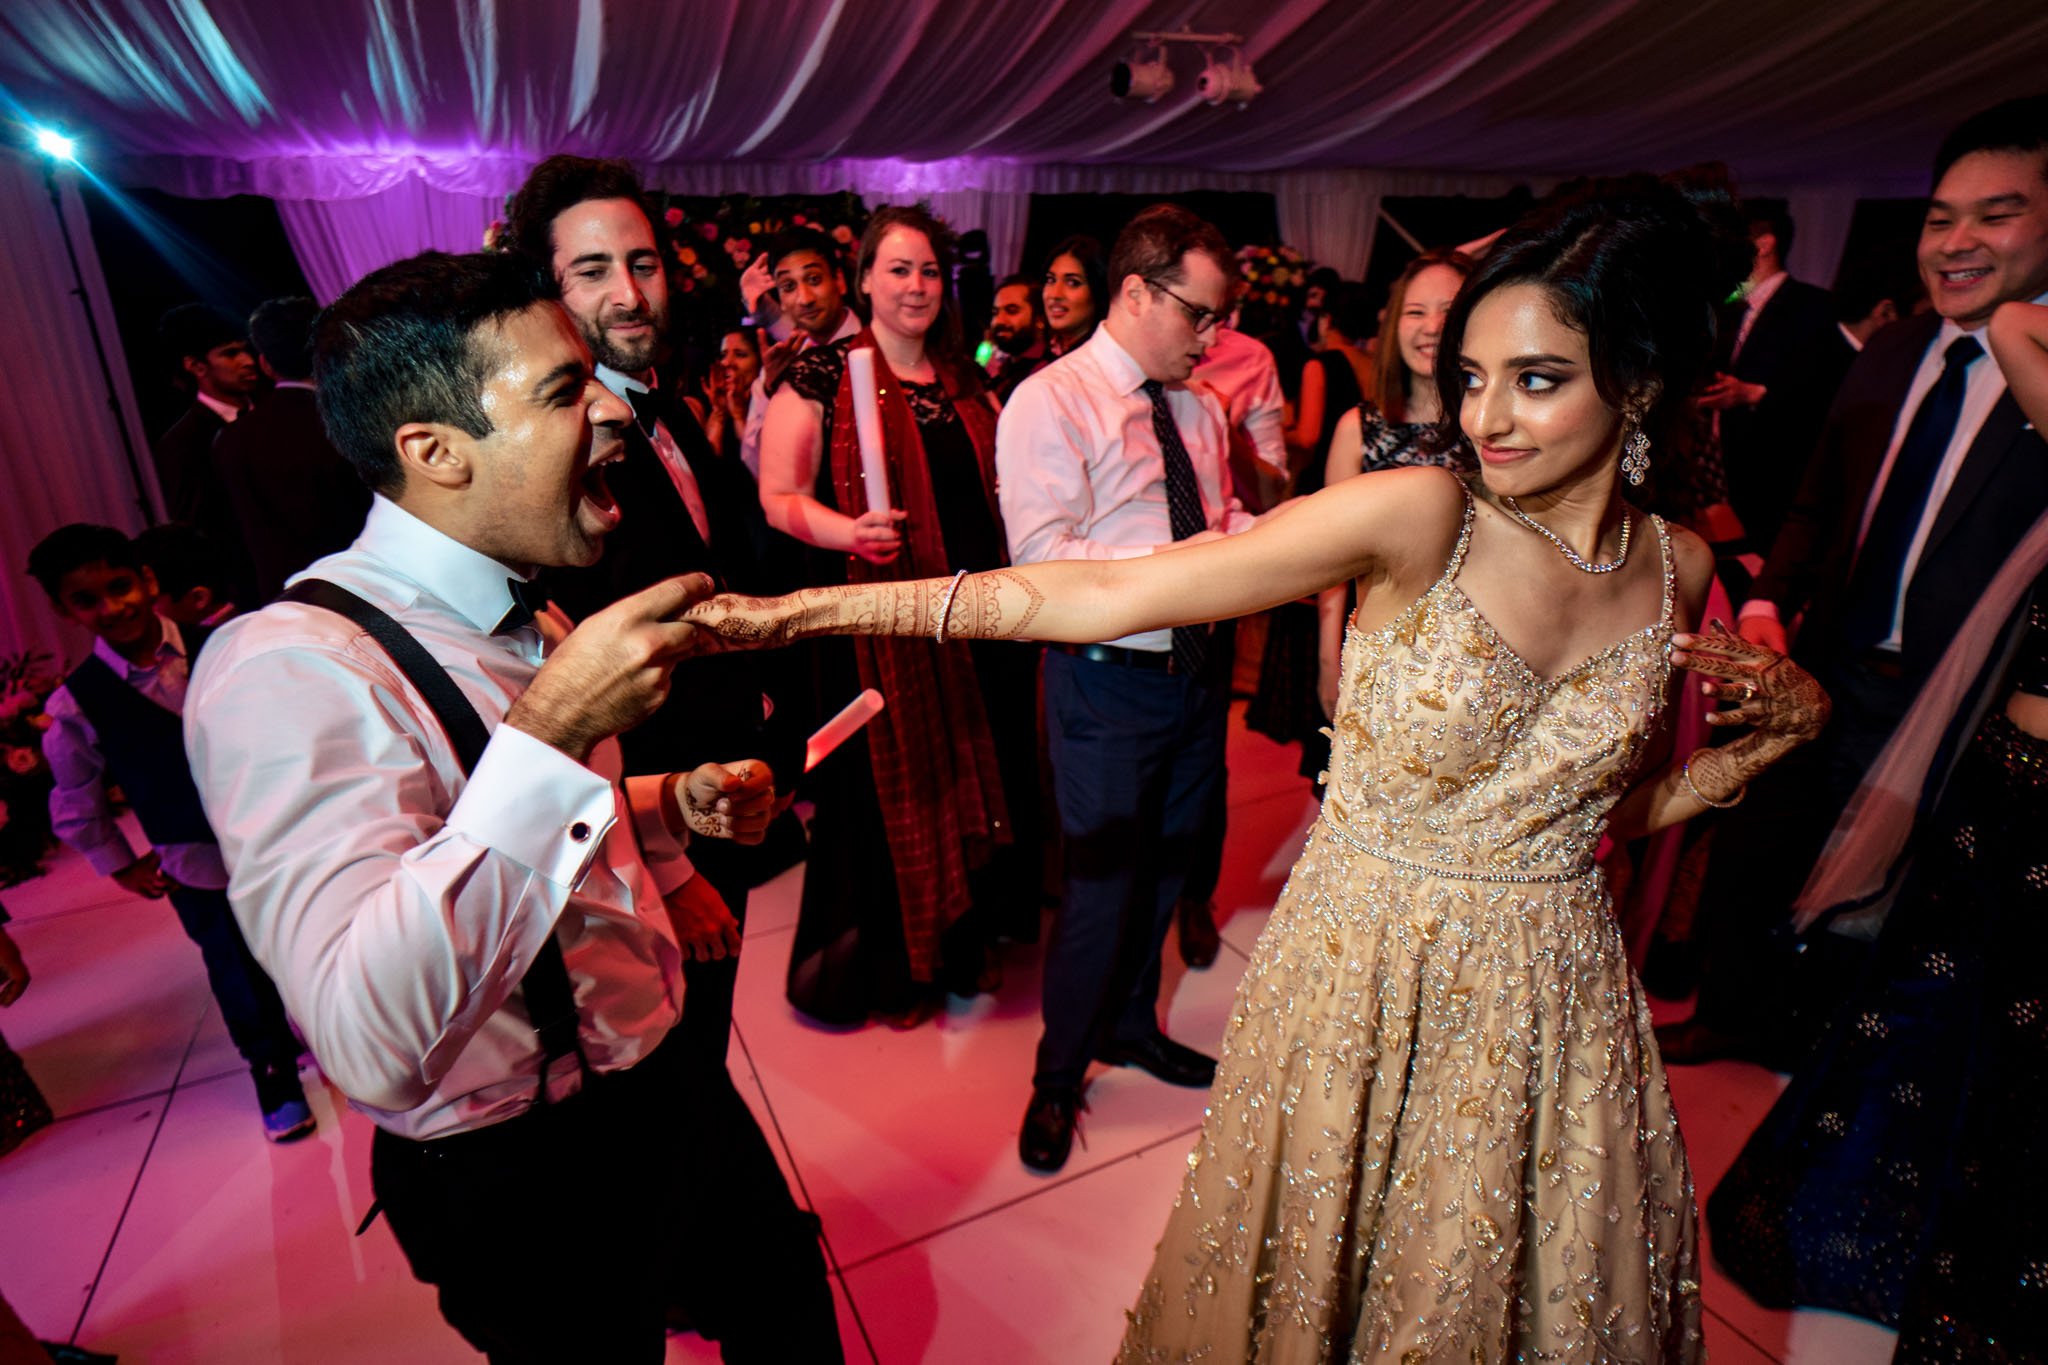 A bride and groom dancing at a Biltmore Estate wedding reception.